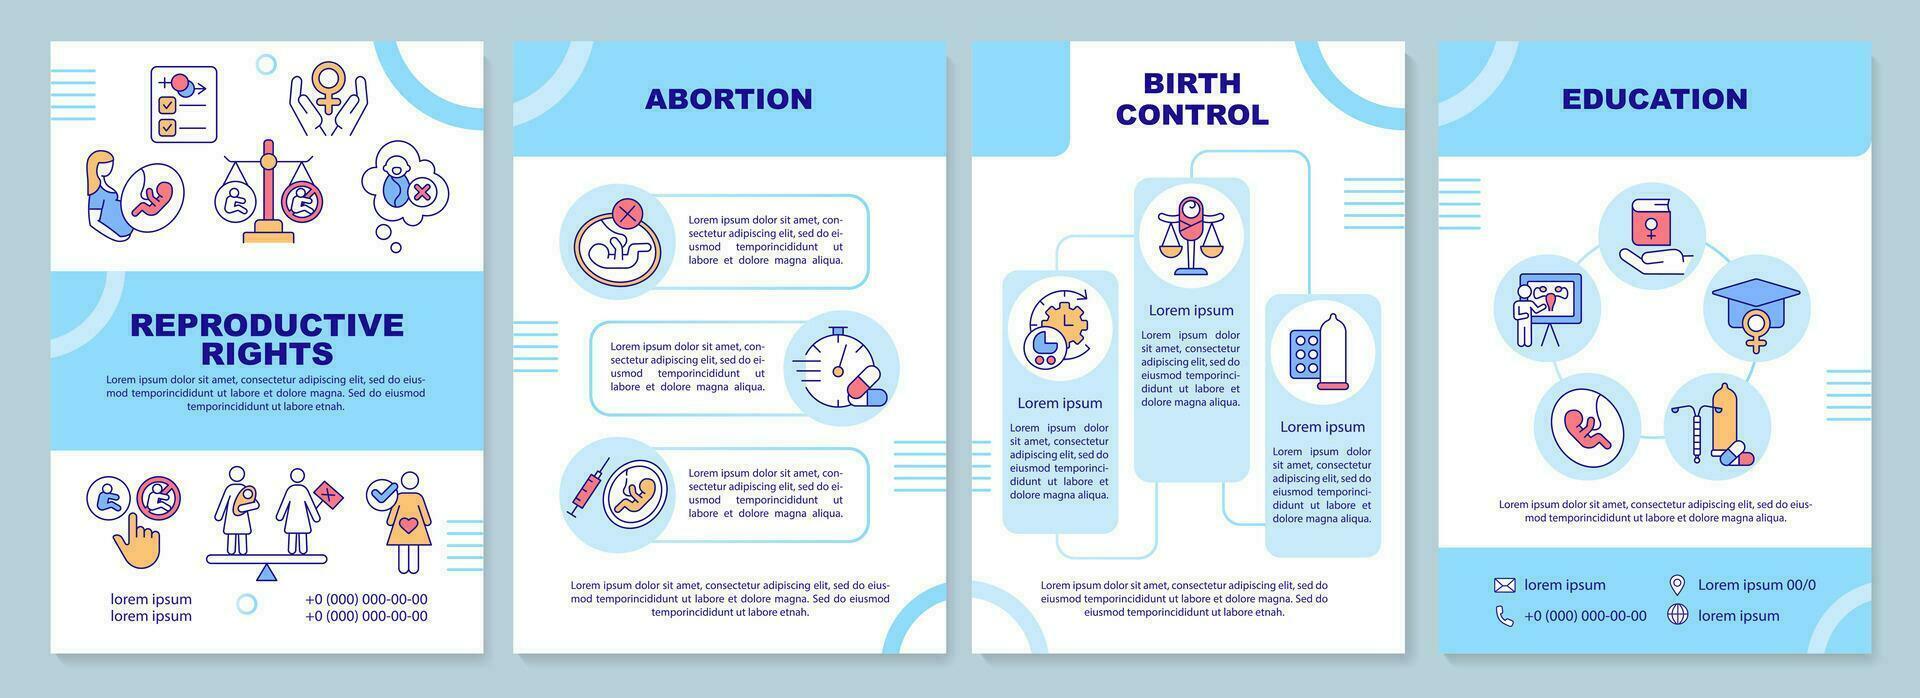 reproductivo derechos azul folleto modelo. mujer empoderamiento. folleto diseño con lineal iconos editable 4 4 vector diseños para presentación, anual informes